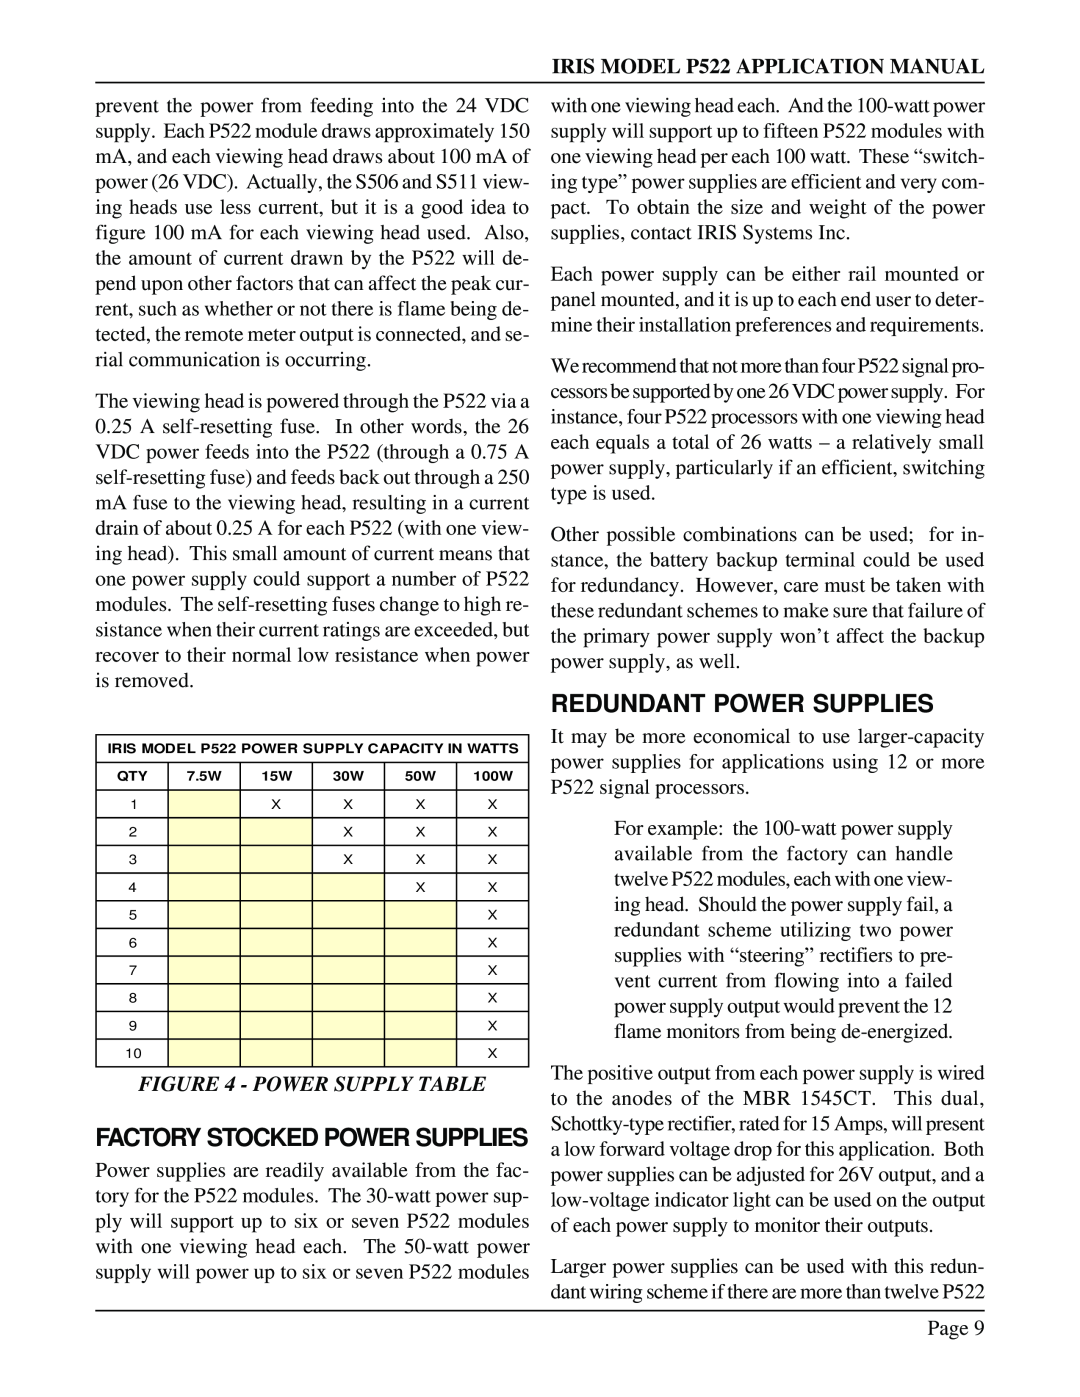 IRIS manual Redundant Power Supplies, Factory Stocked Power Supplies, IRIS MODEL P522 APPLICATION MANUAL 